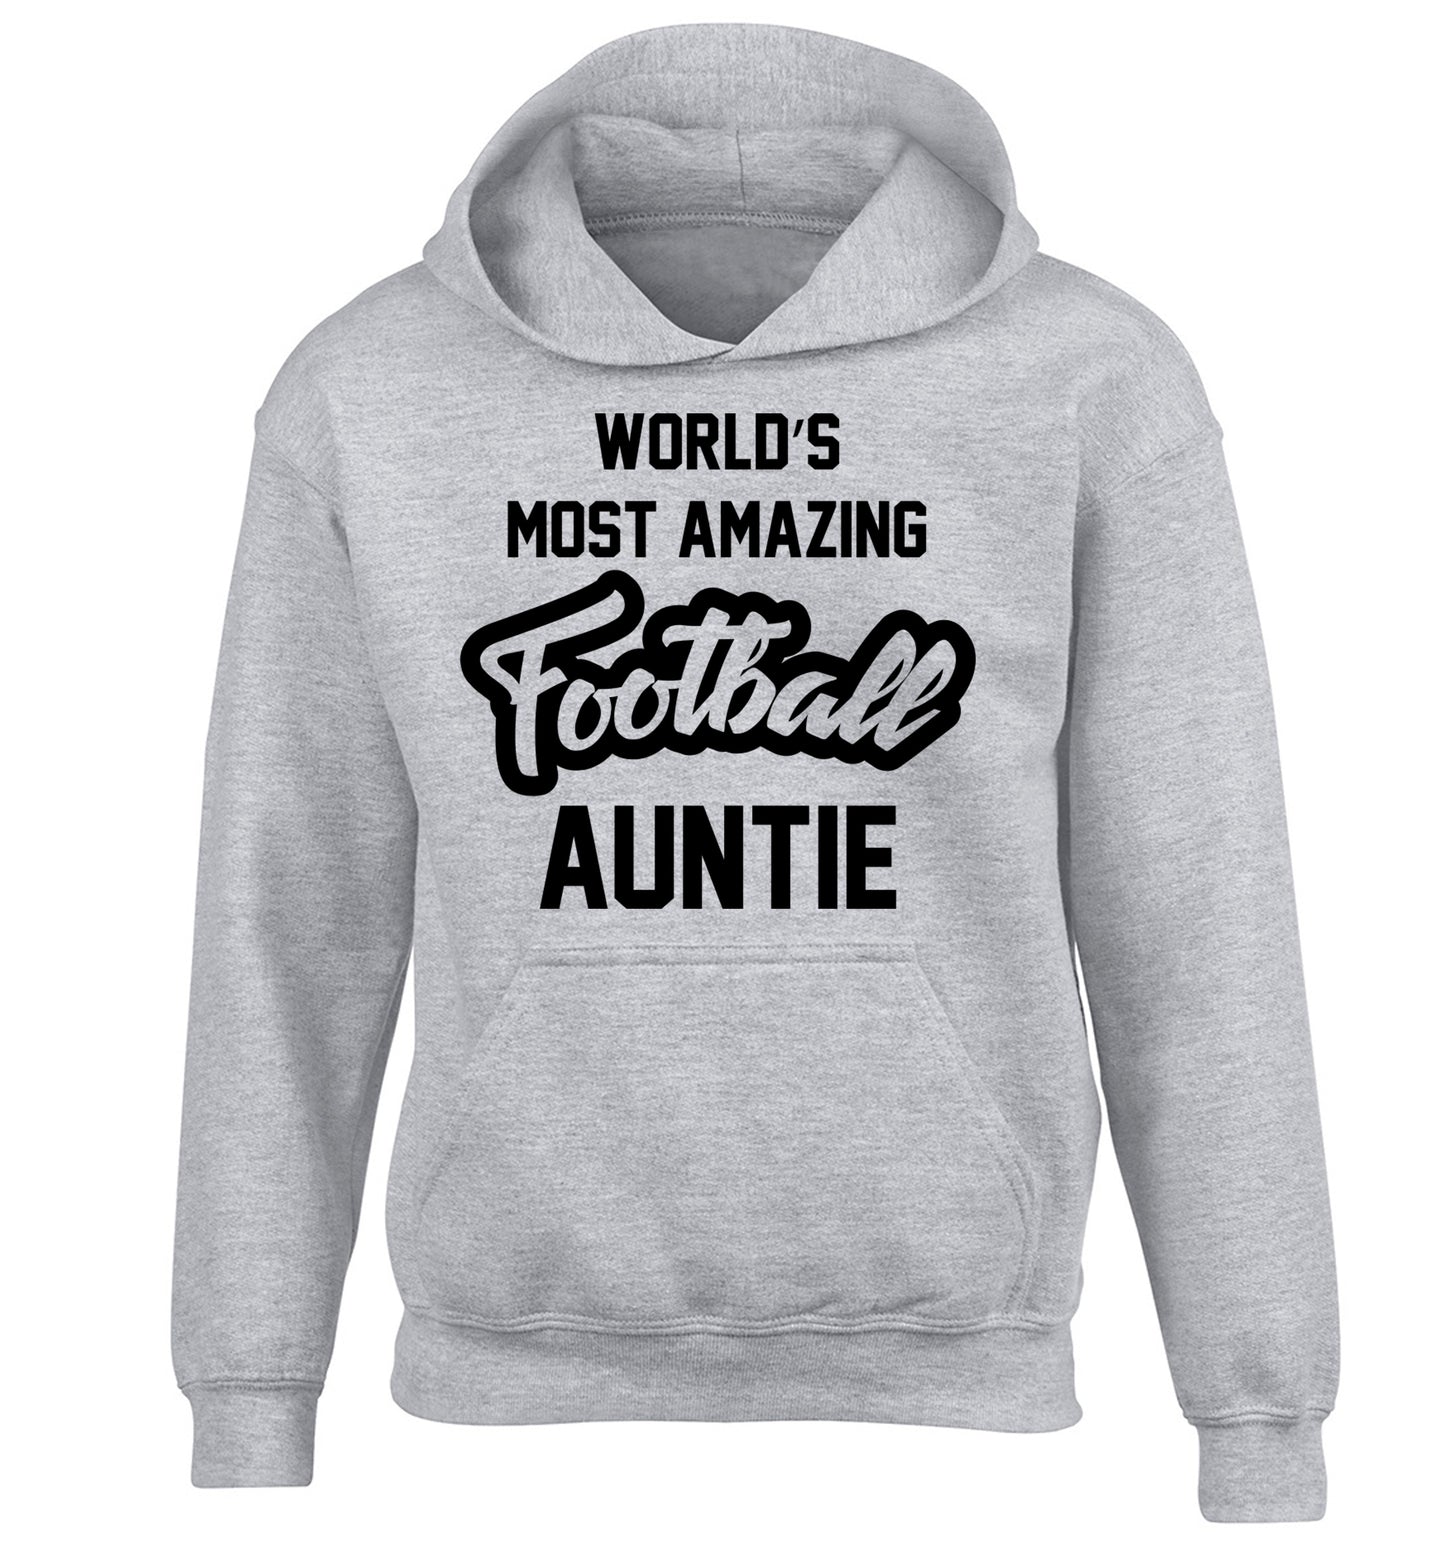 Worlds most amazing football auntie children's grey hoodie 12-14 Years